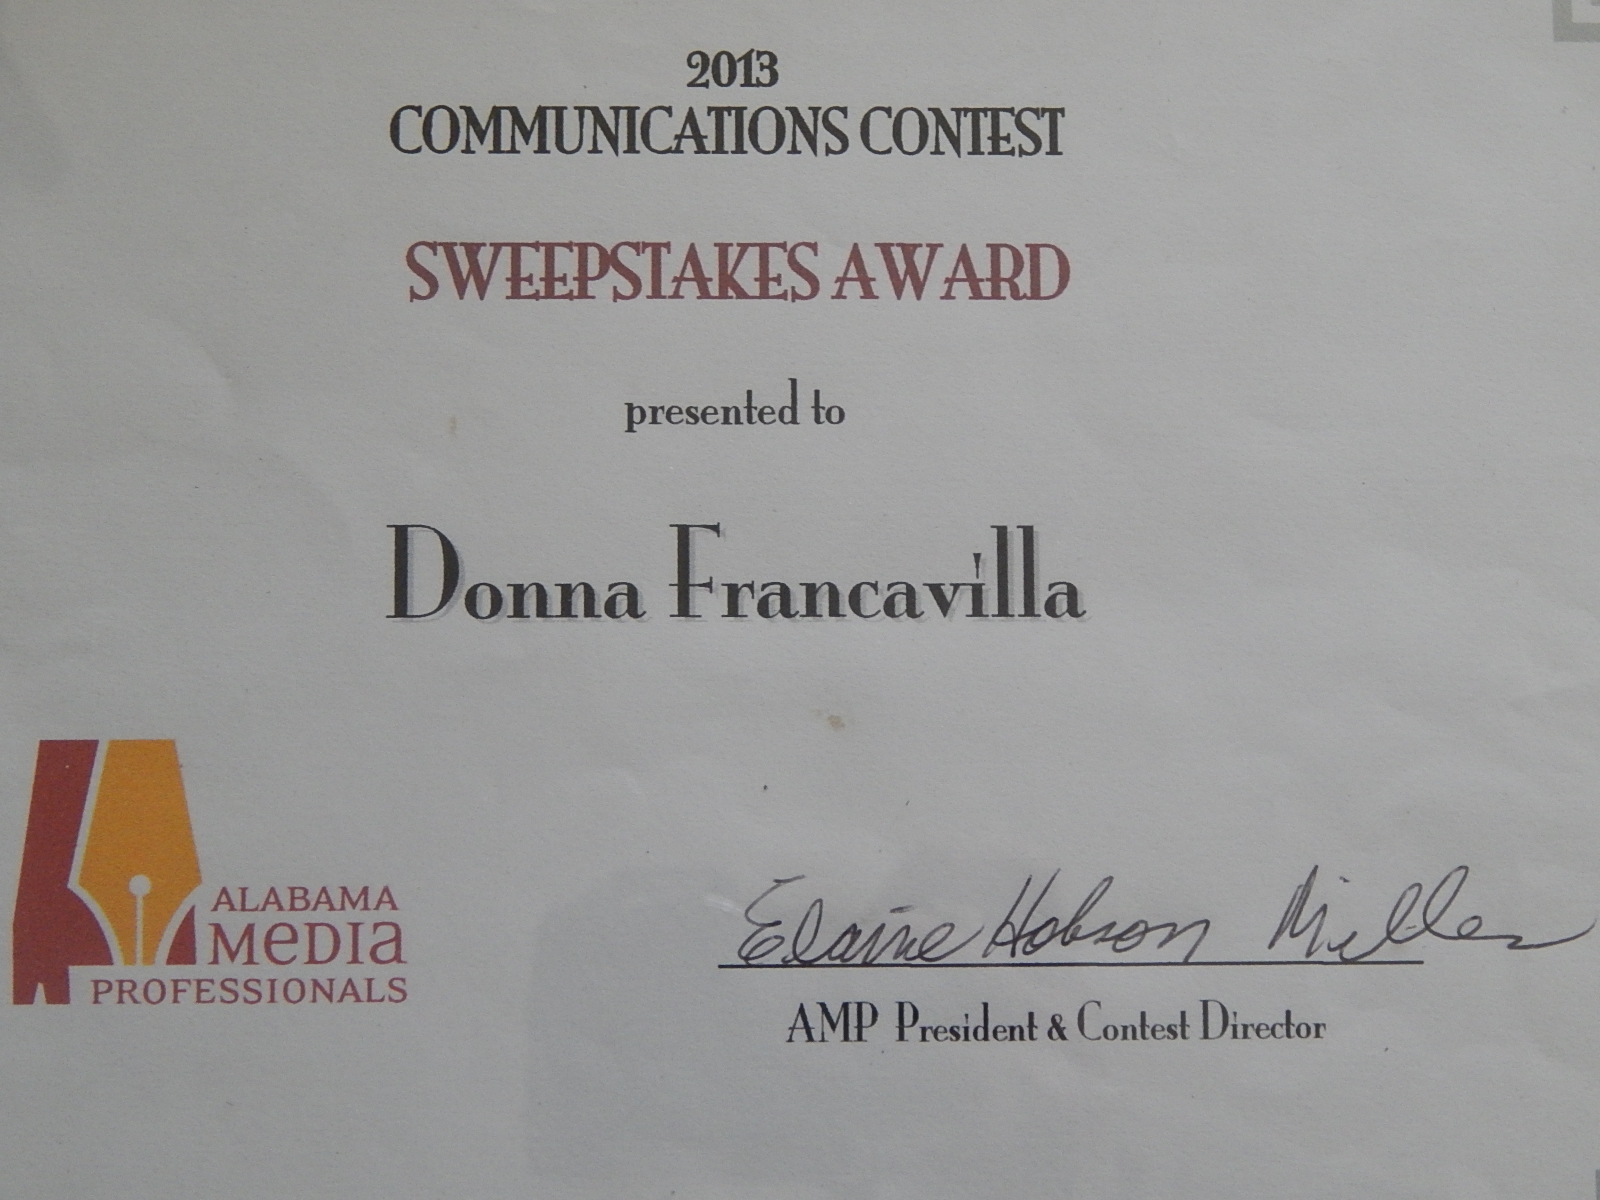 2013 Alabama Media Professionals Communications Contest Award - State Award - Sweepstake Award presented to Donna Francavilla